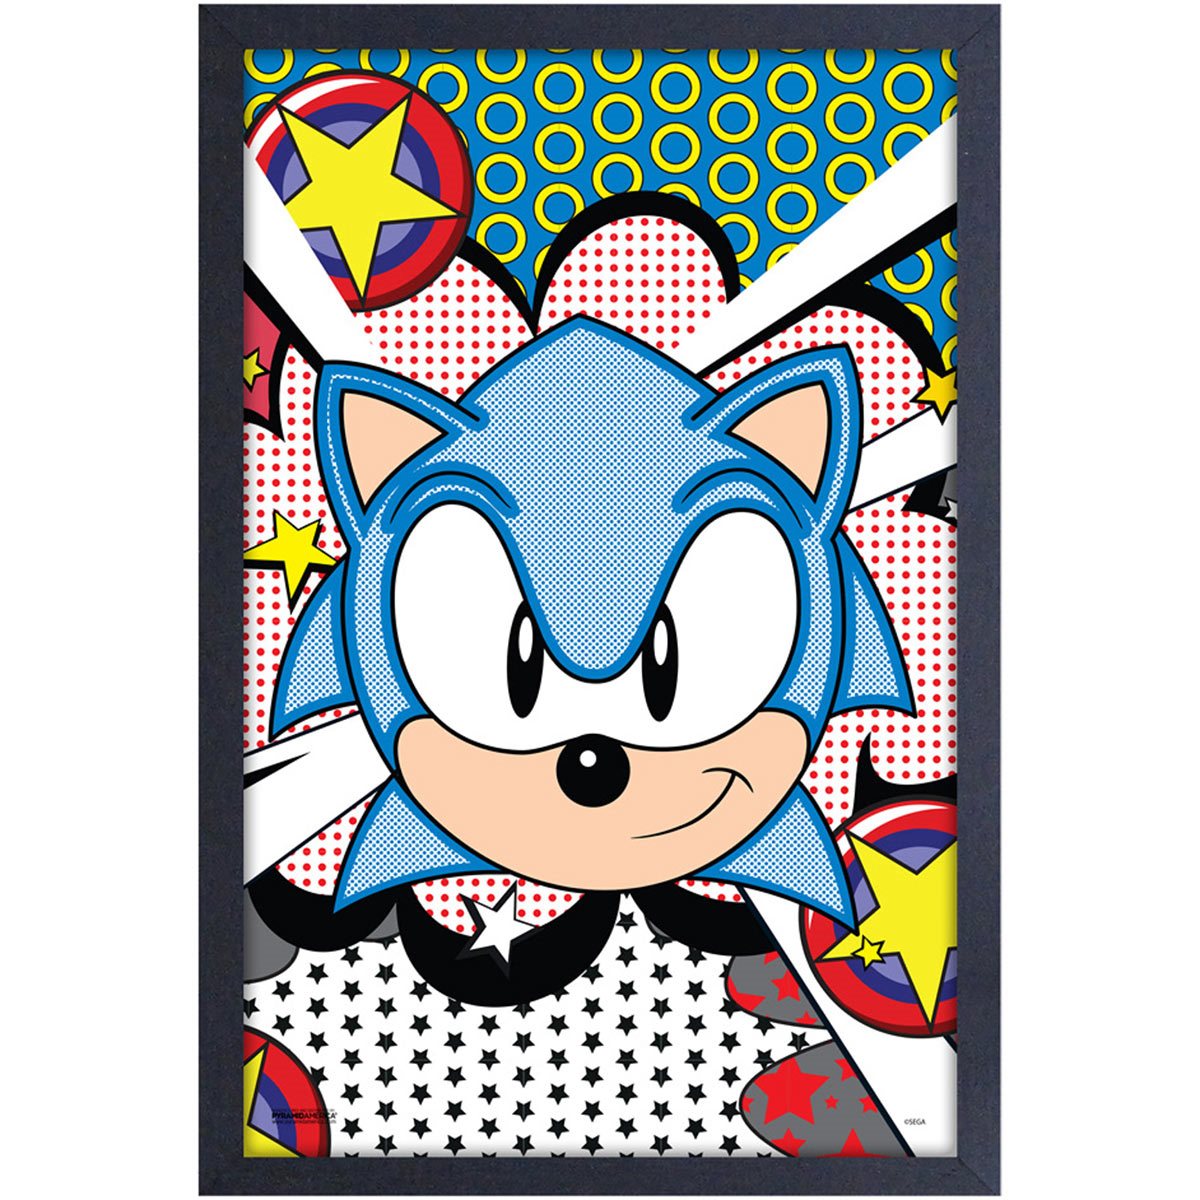 Sonic the Hedgehog Art